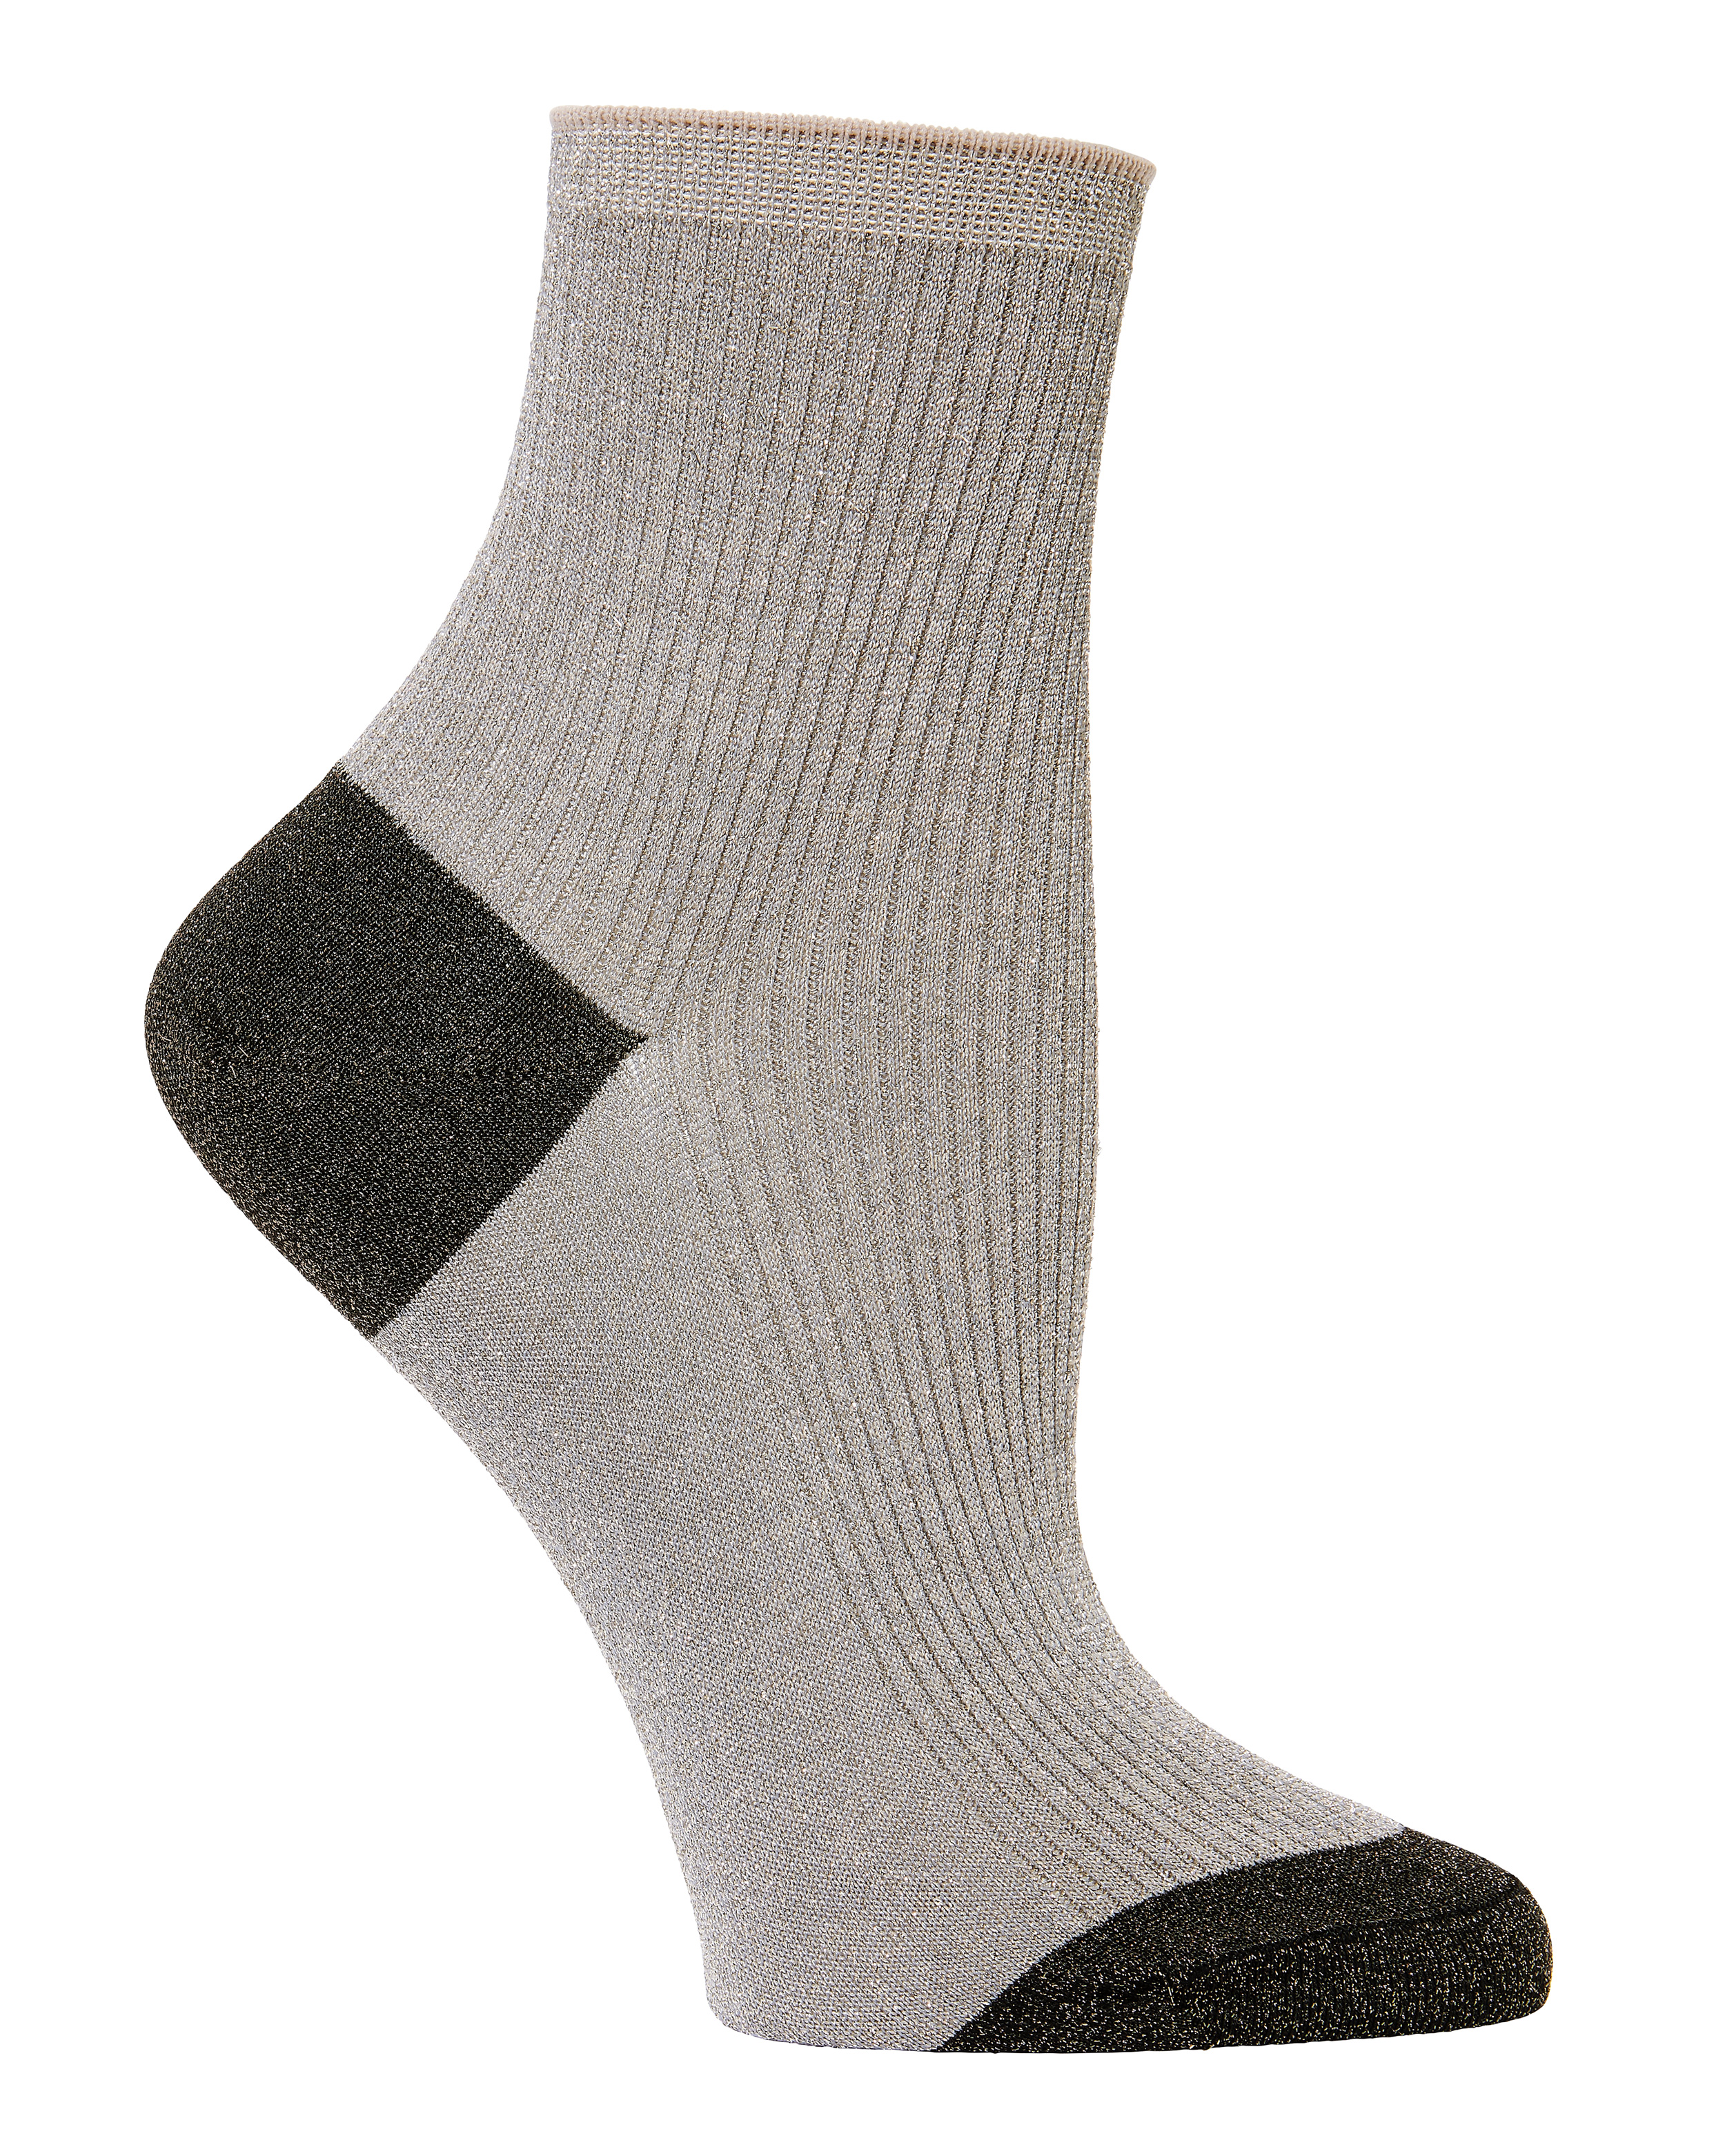 HANSEL FROM BASEL Cordy Sparkle Short Socks,109064